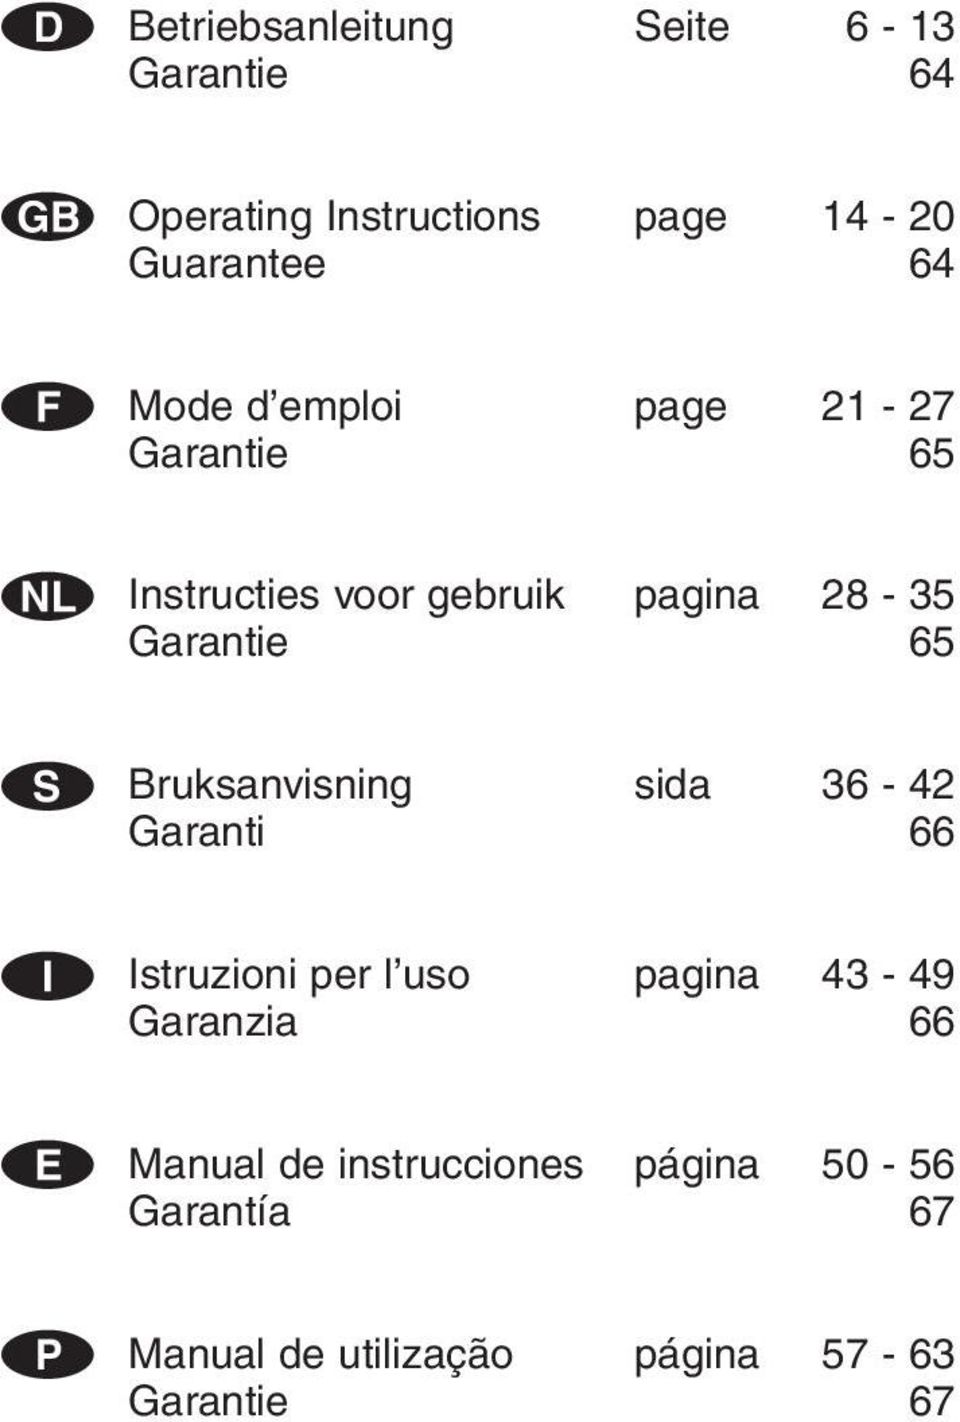 Garantie 65 Bruksanvisning sida 36-42 Garanti 66 struzioni per l uso pagina 43-49 Garanzia